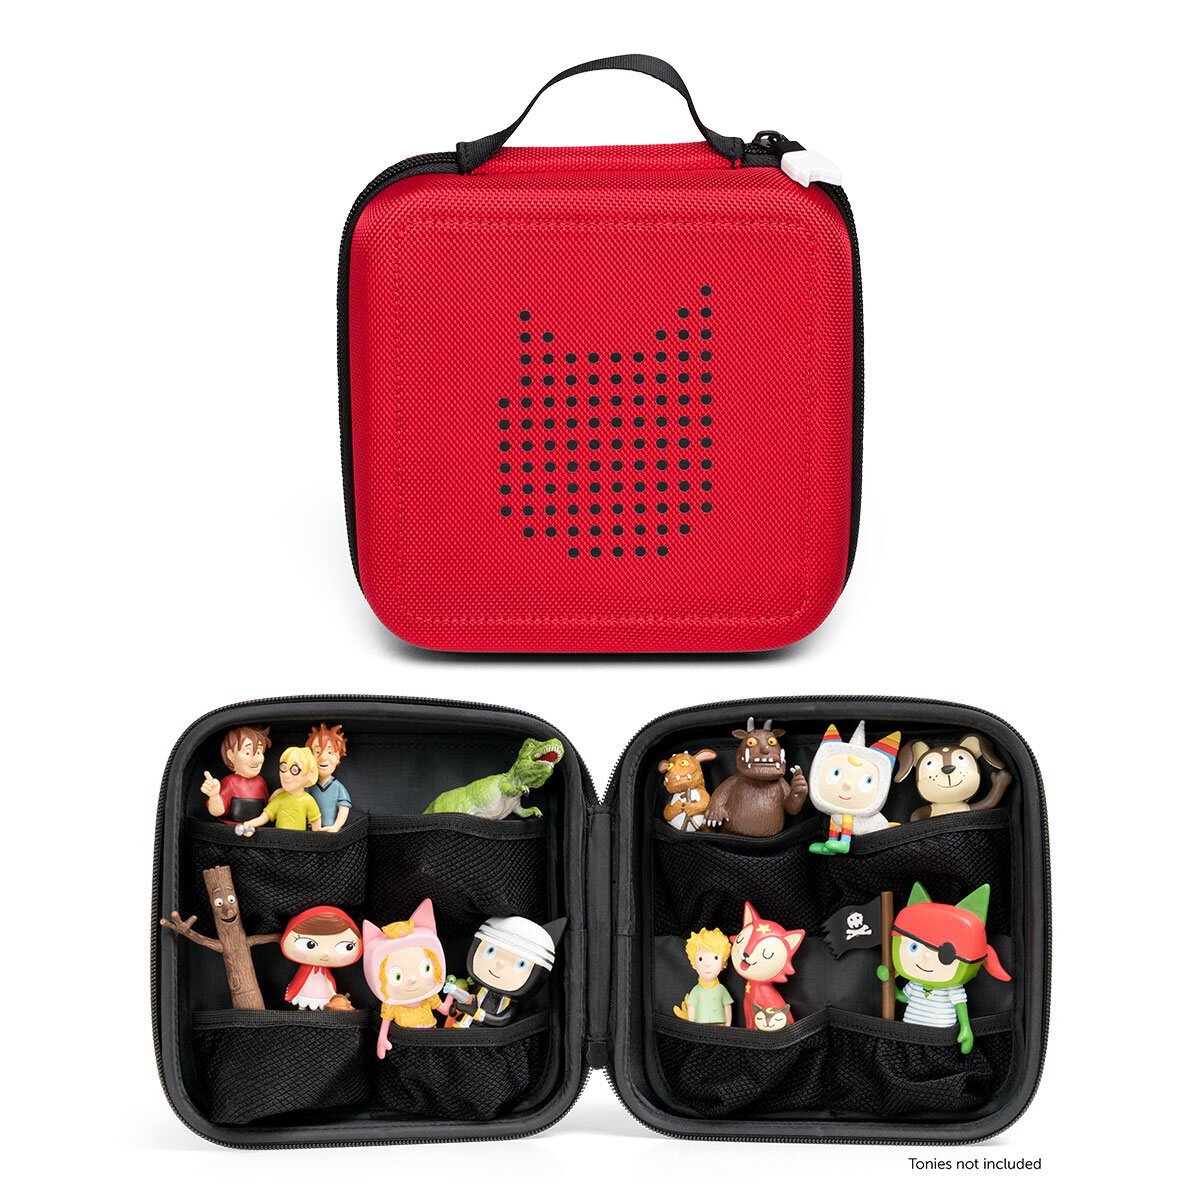 Buy Tonies Red Starter Kit Bundle 5 Pack Carrier Image at Costco.co.uk